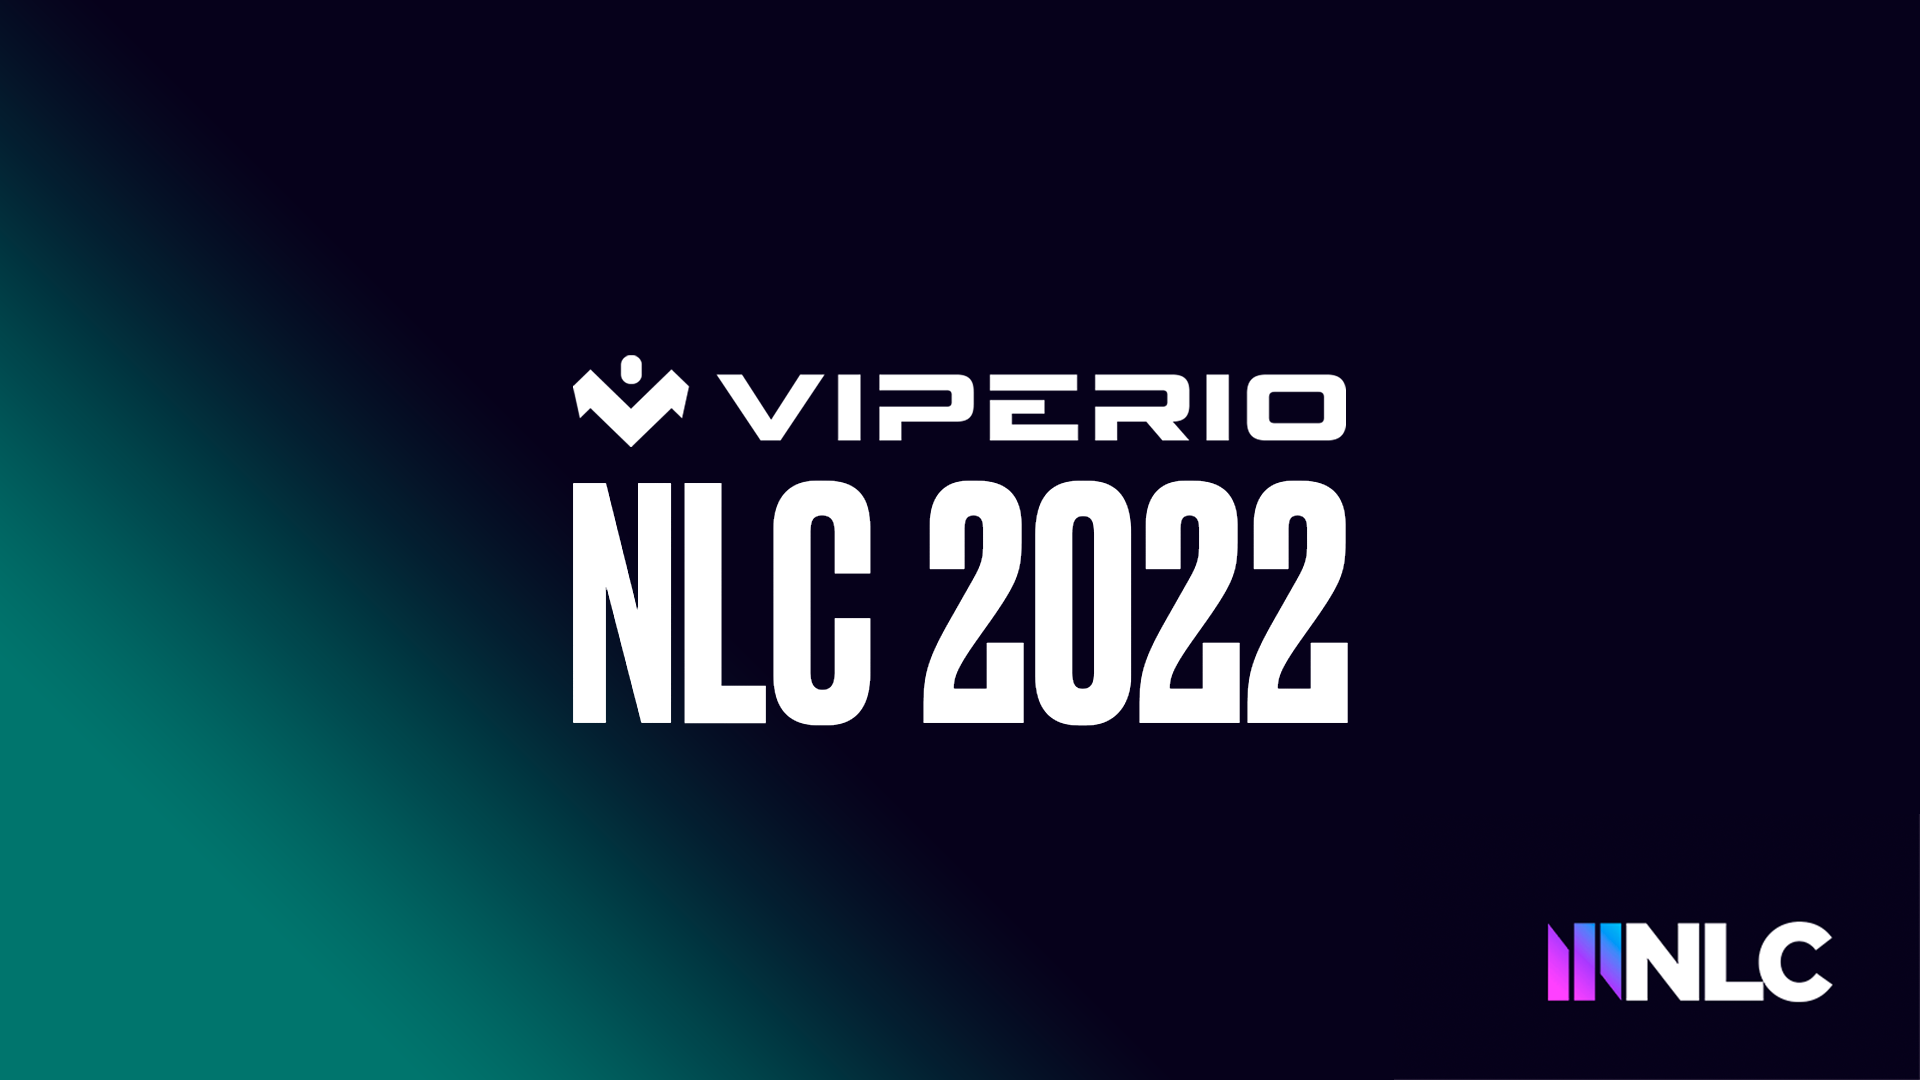 Viperio finish NLC Spring Regular Season with 8W-4L record